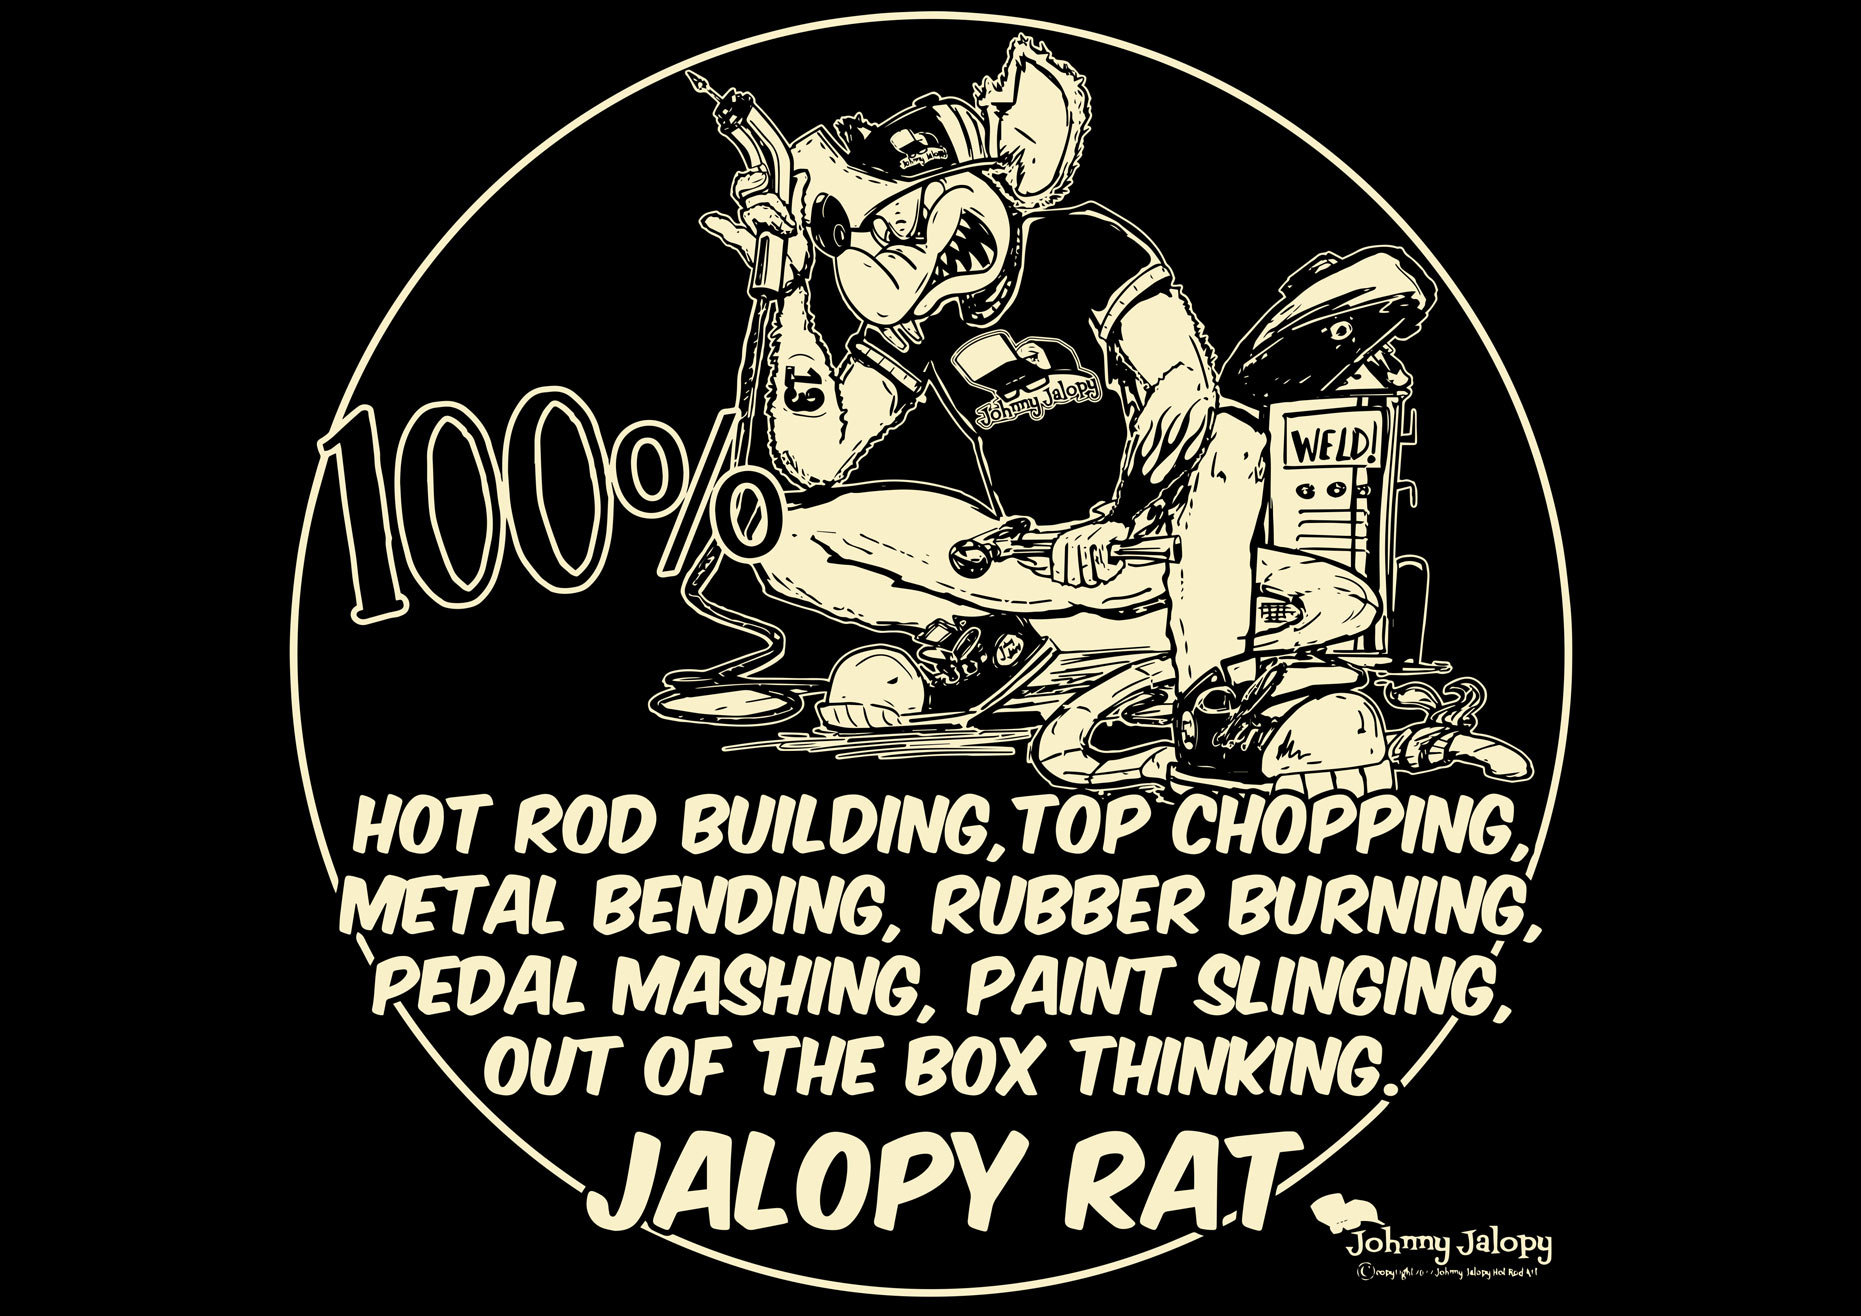 Jalopy Rat